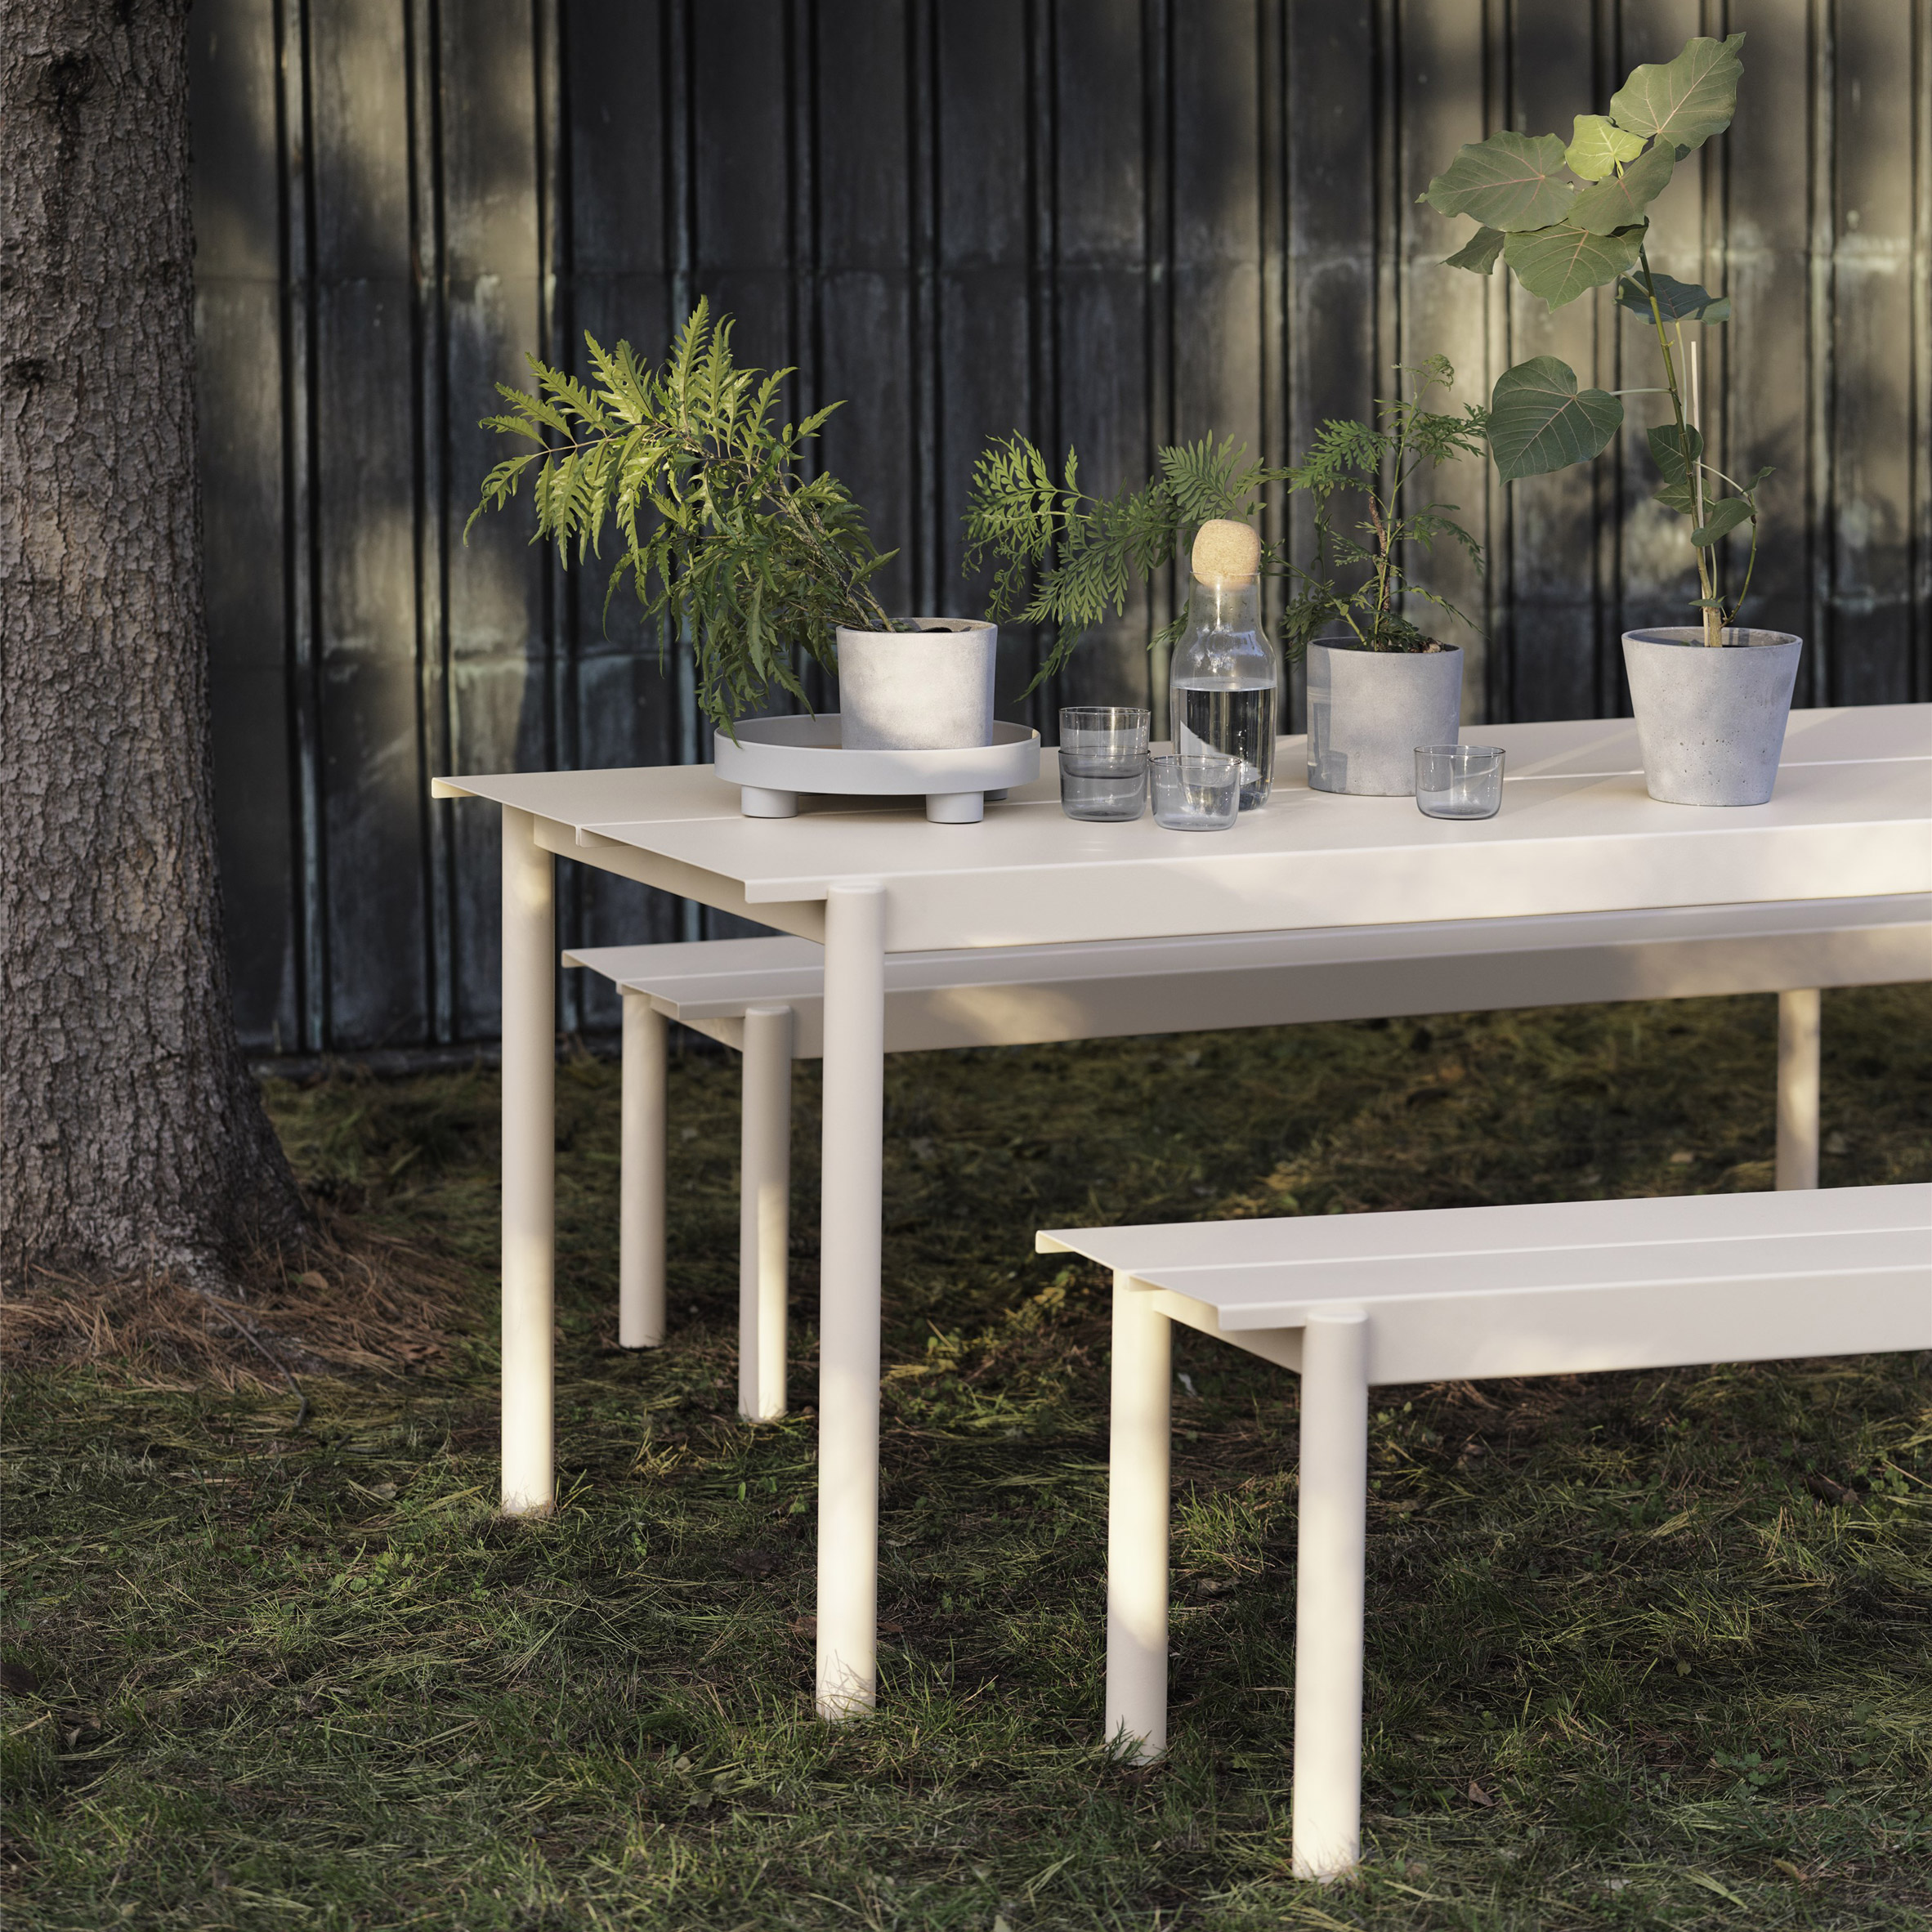 Outdoor furniture: Linear by Thomas Bentzen for Muuto